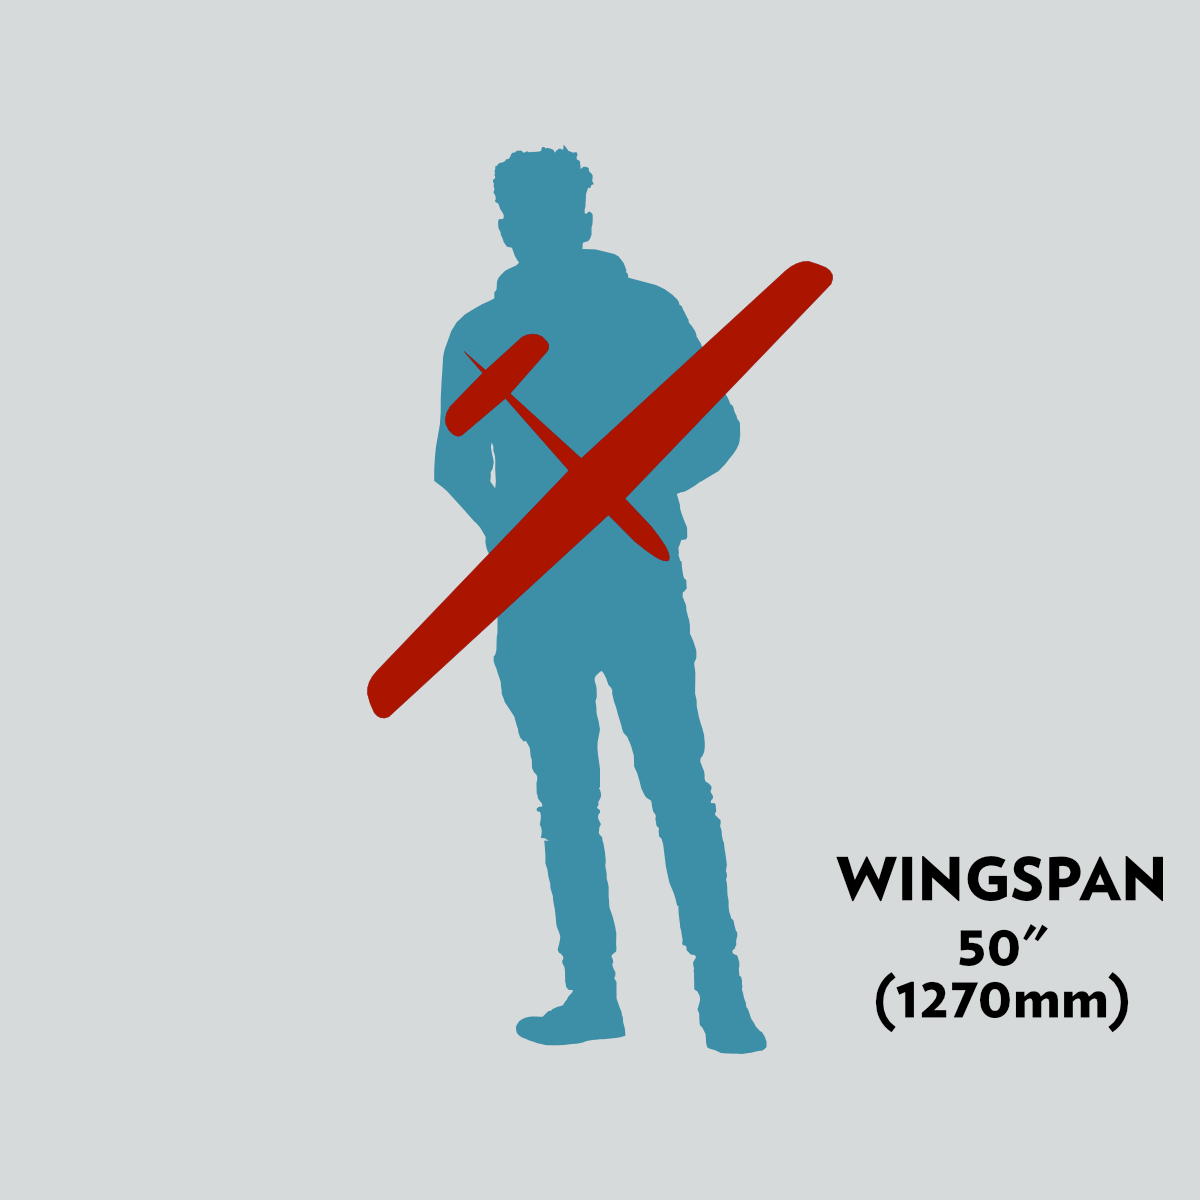 50" (1270mm) Wingspan